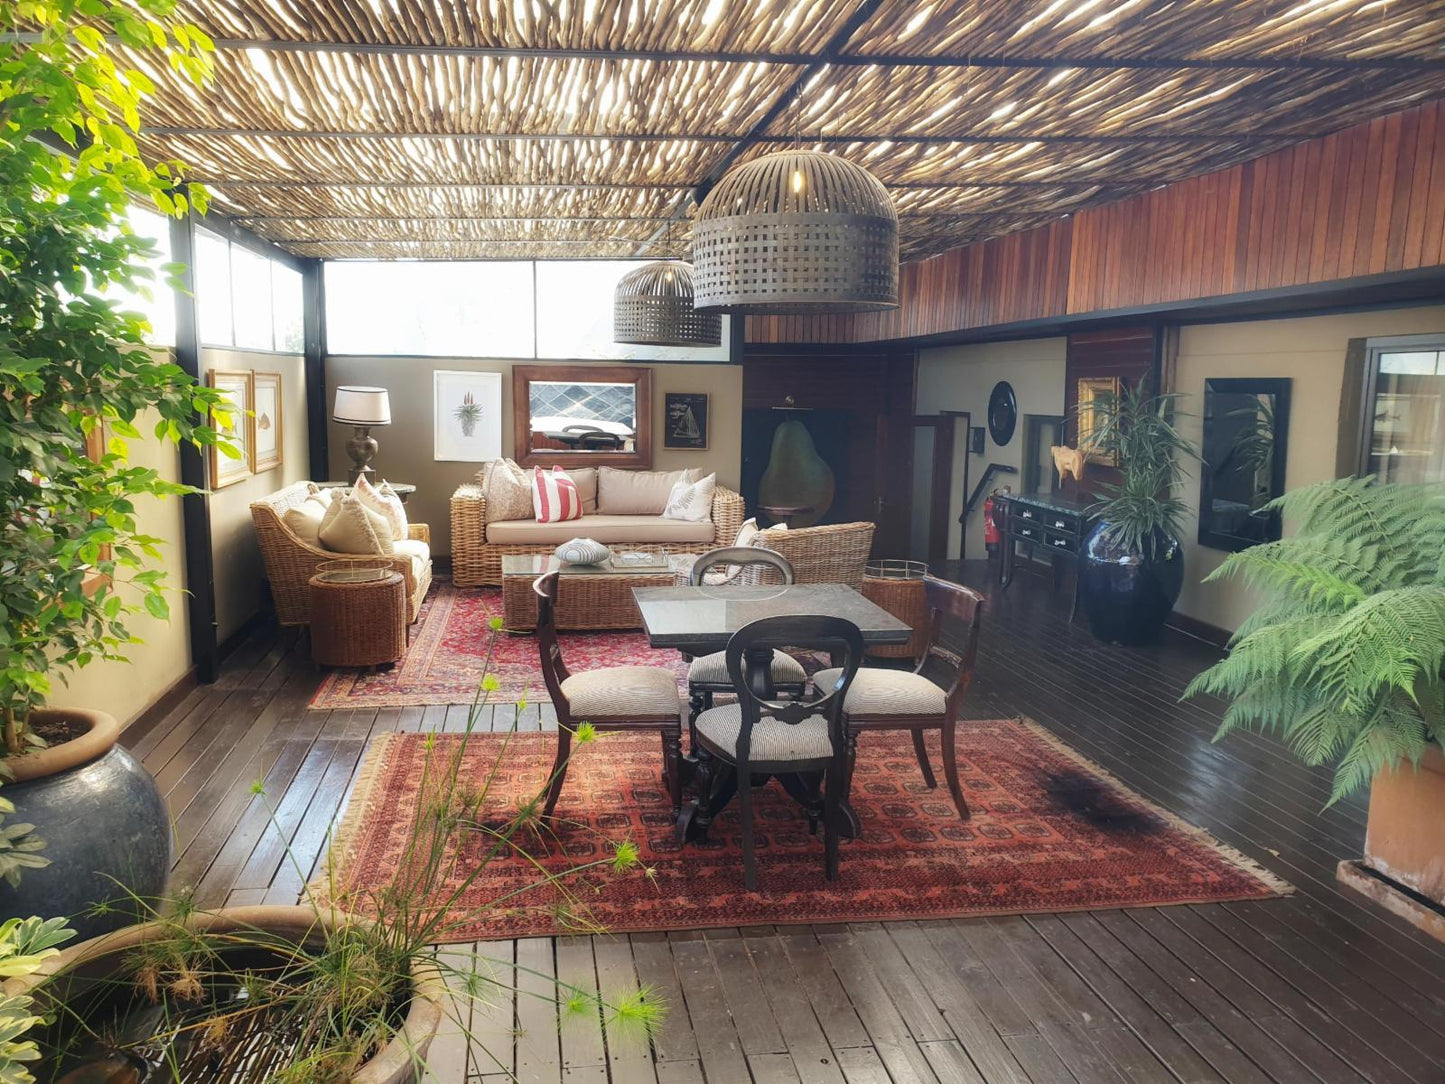 Madiba luxury Suite @ The Residence